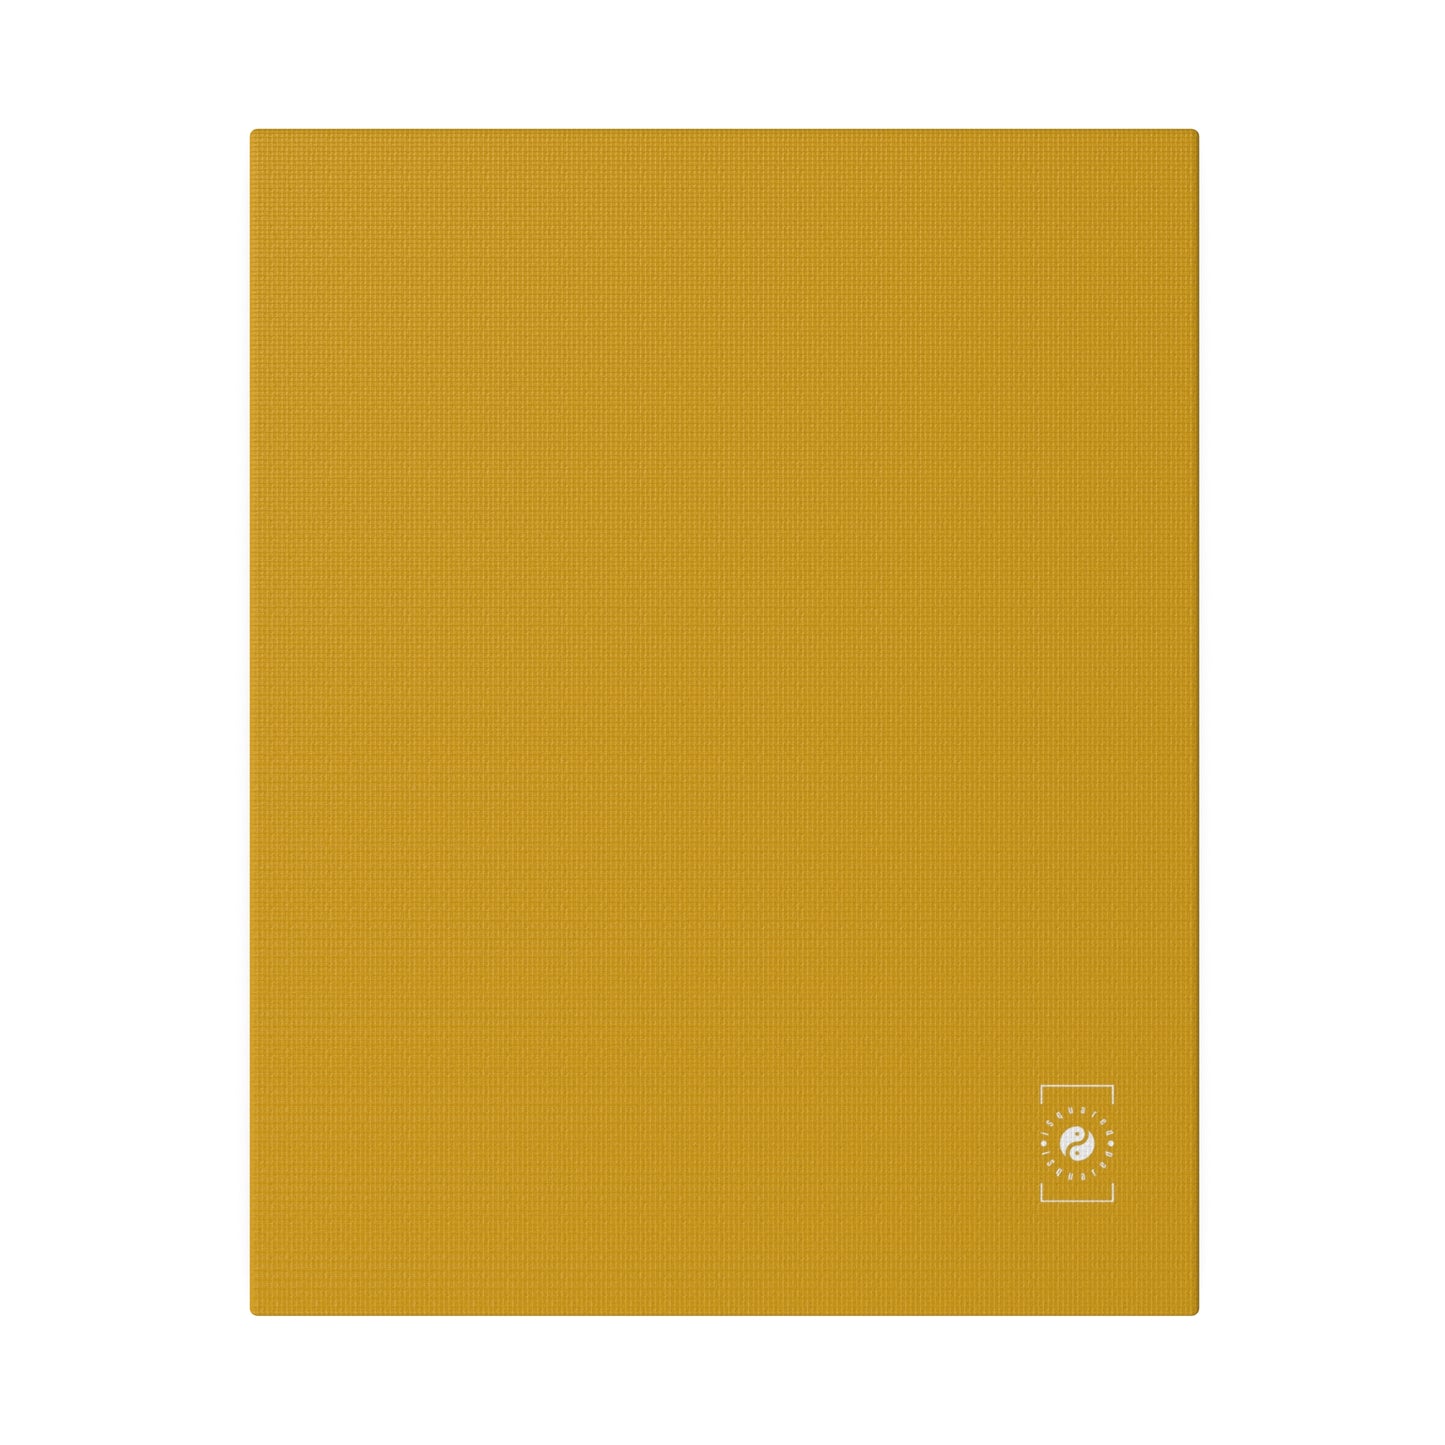 DAA520 Goldenrod - Art Print Canvas